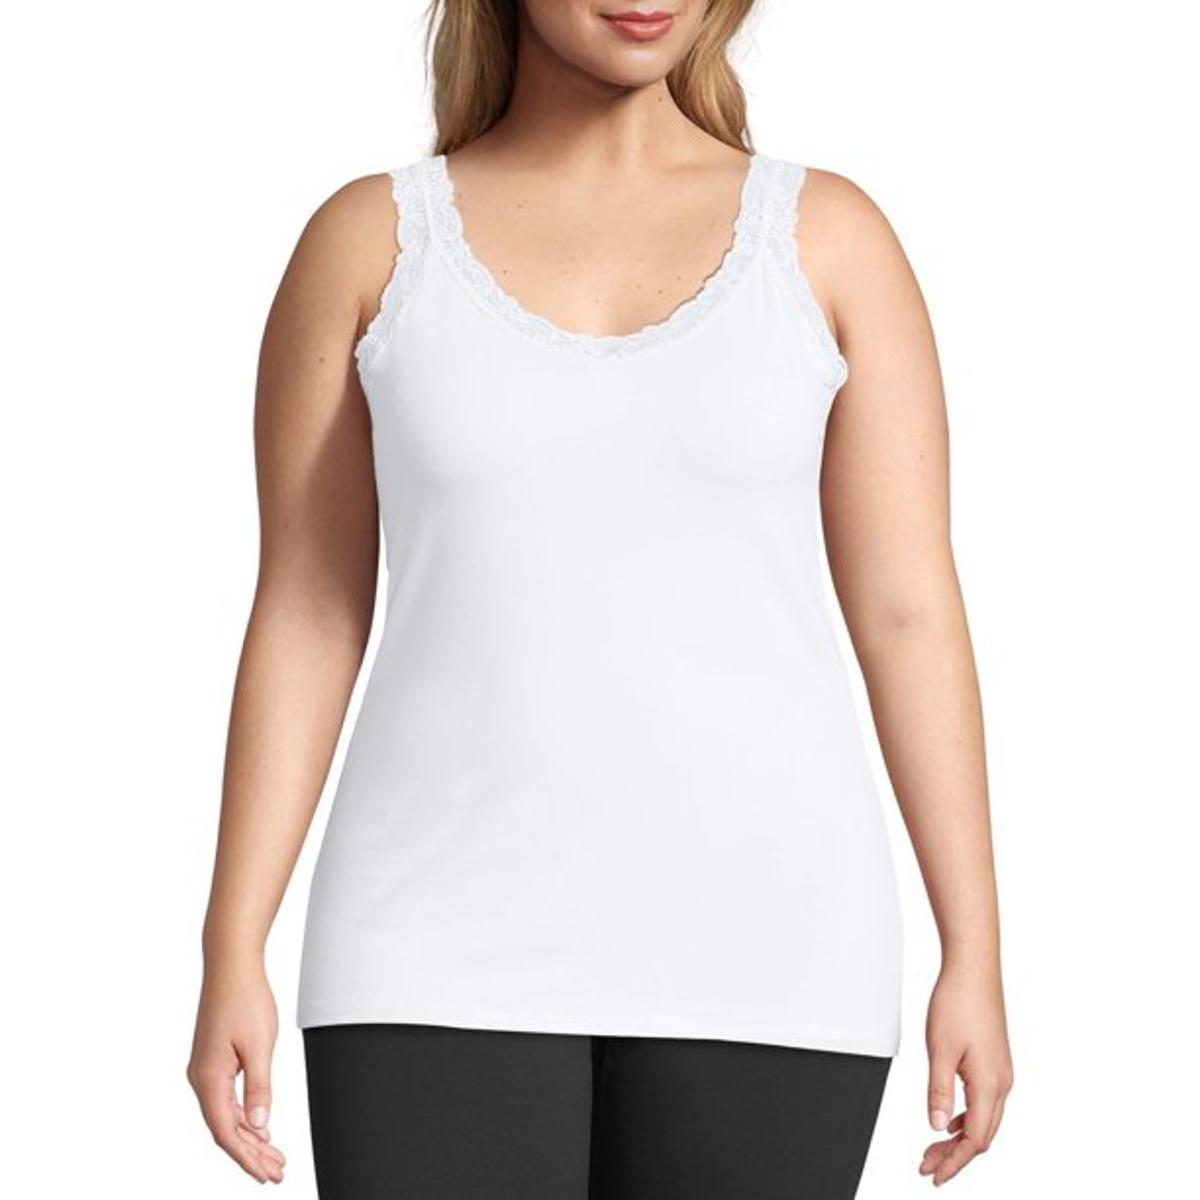 Sleeveless Inner wear Wide Strap Trim Cotton Soft Stretchy Tank Tops Free  Size Camisole Shameez Slip for girls Ladies